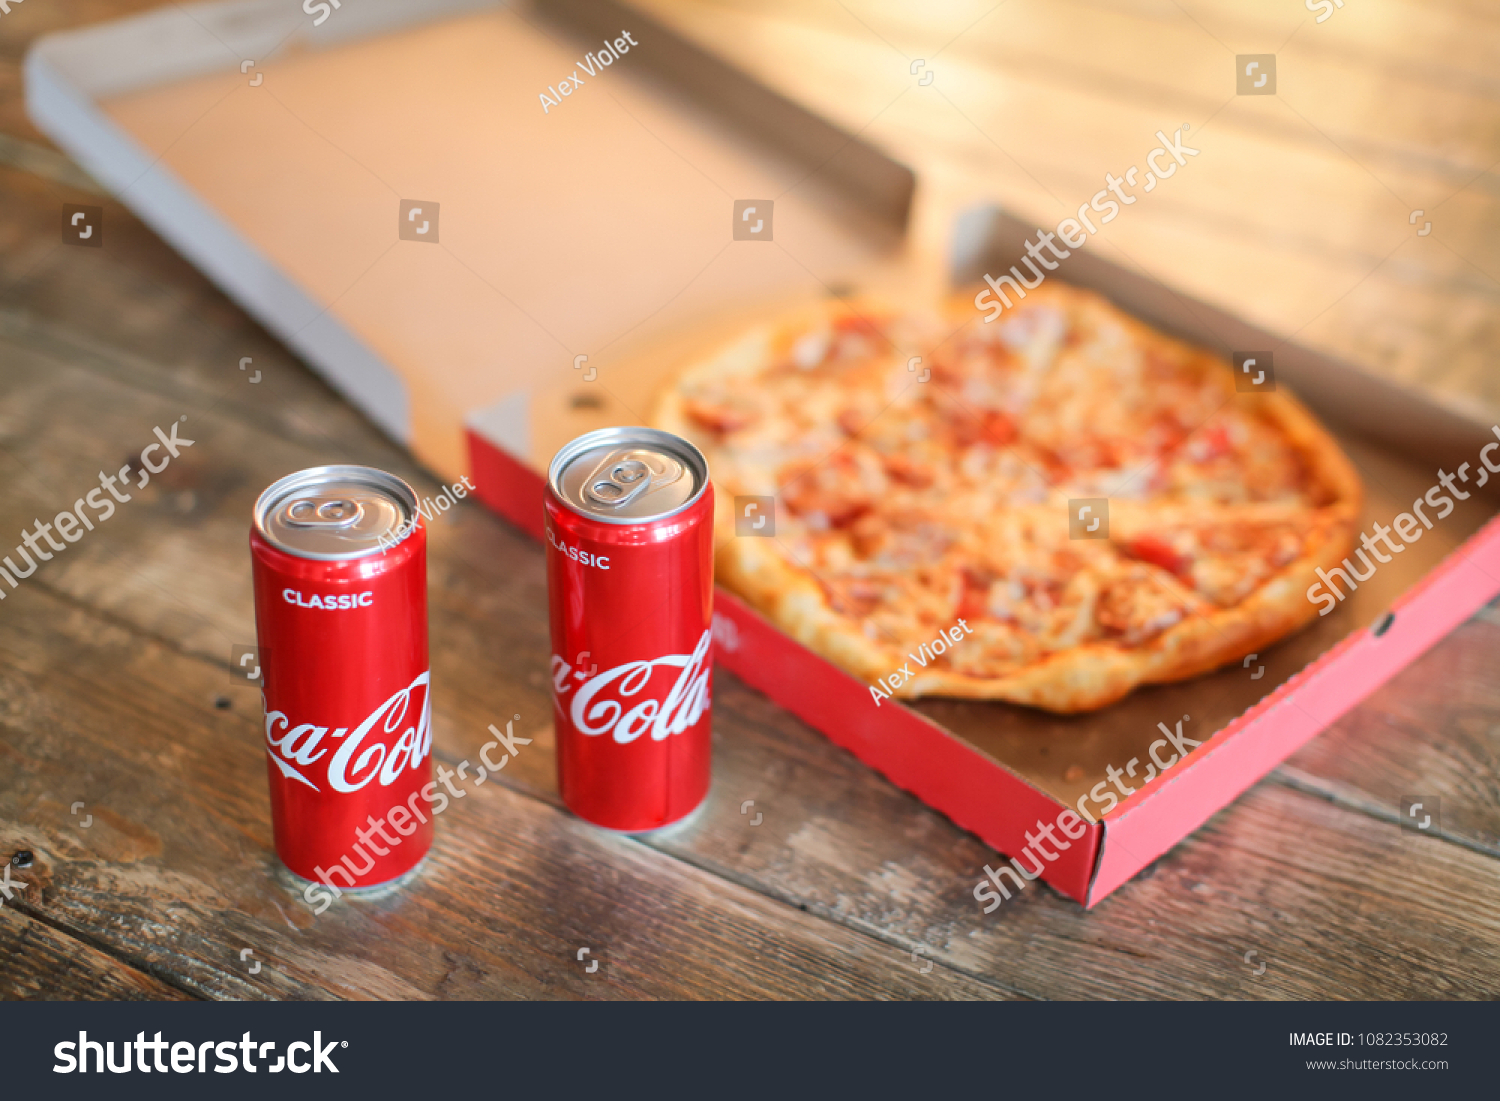 фотосессия с колой и пиццей фото 12